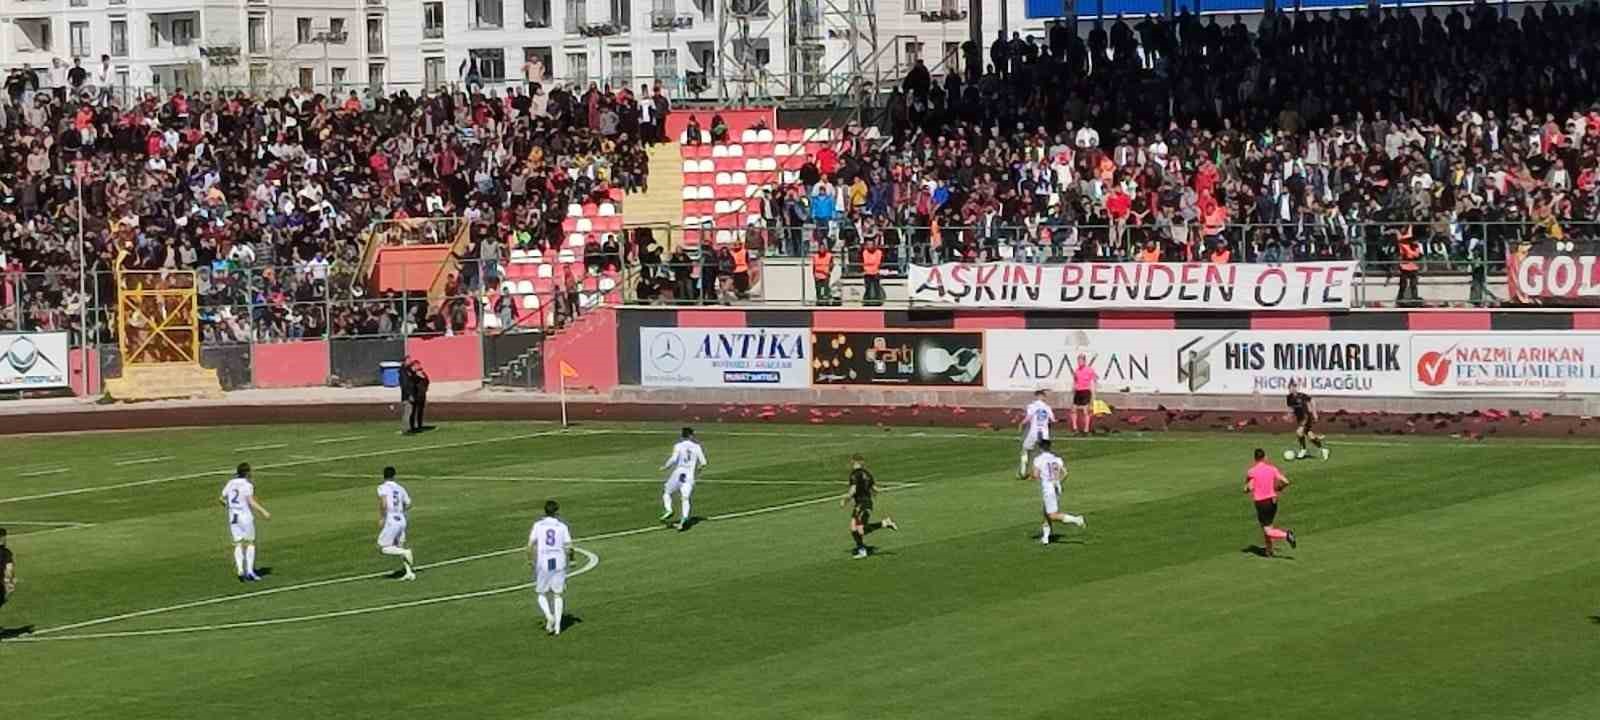 TFF 2. Lig: Vanspor FK: 0 - Kocaelispor: 0